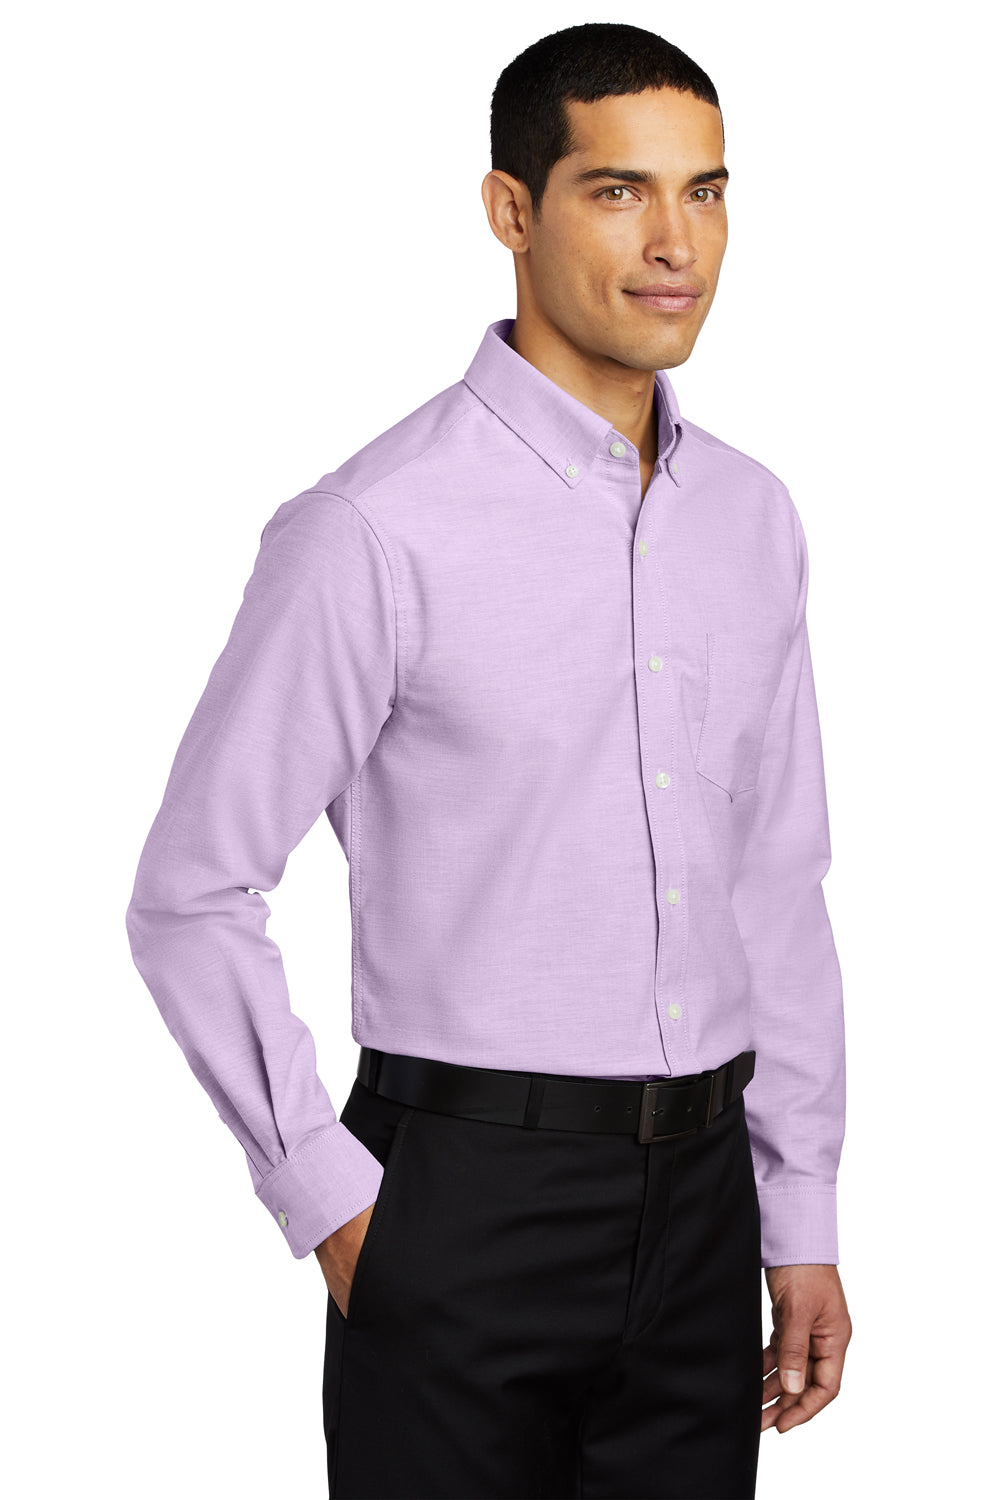 Port Authority S658/TS658 SuperPro Oxford Wrinkle Resistant Long Sleeve Button Down Shirt w/ Pocket Soft Purple 3Q